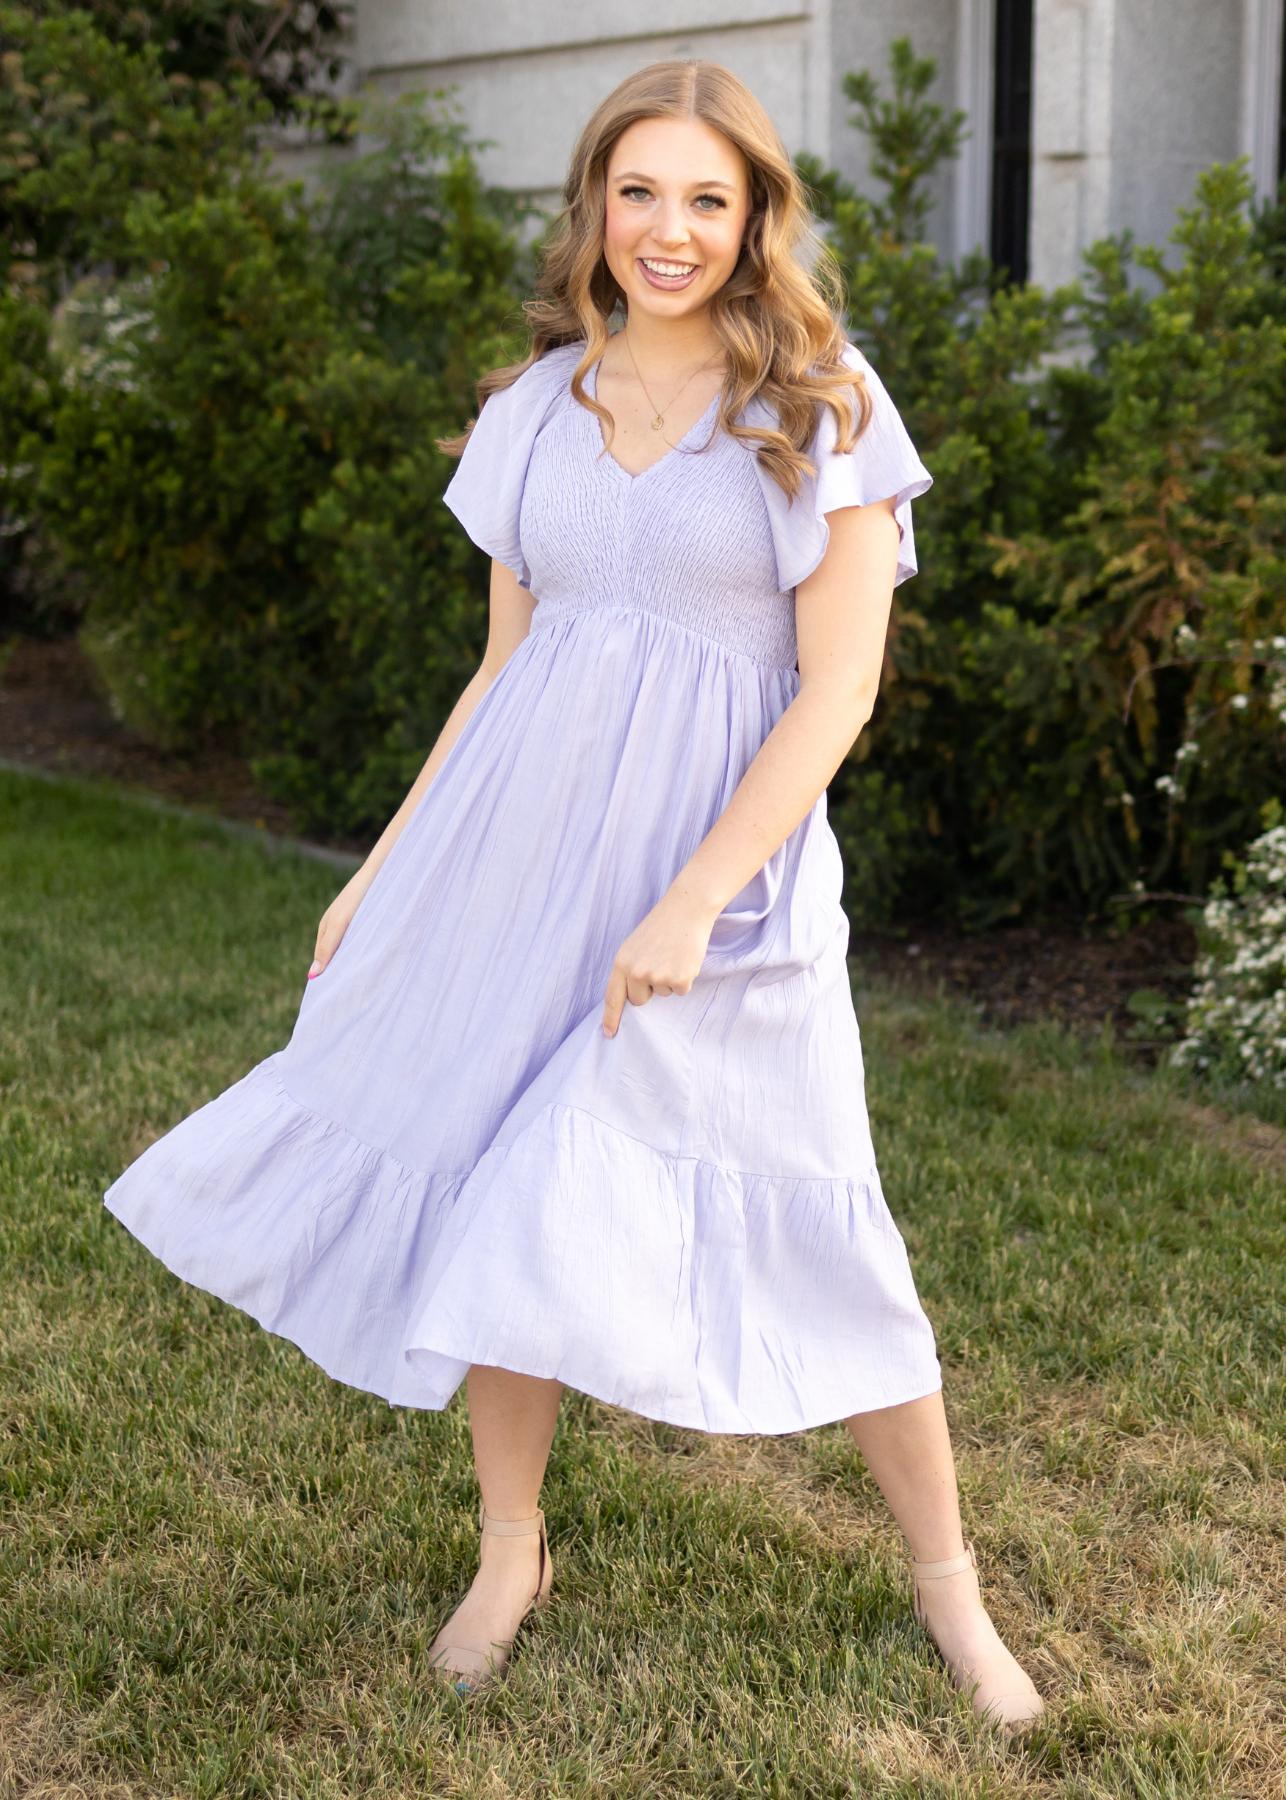 Short sleeve lavender dress with a v-neck and smocked bodice